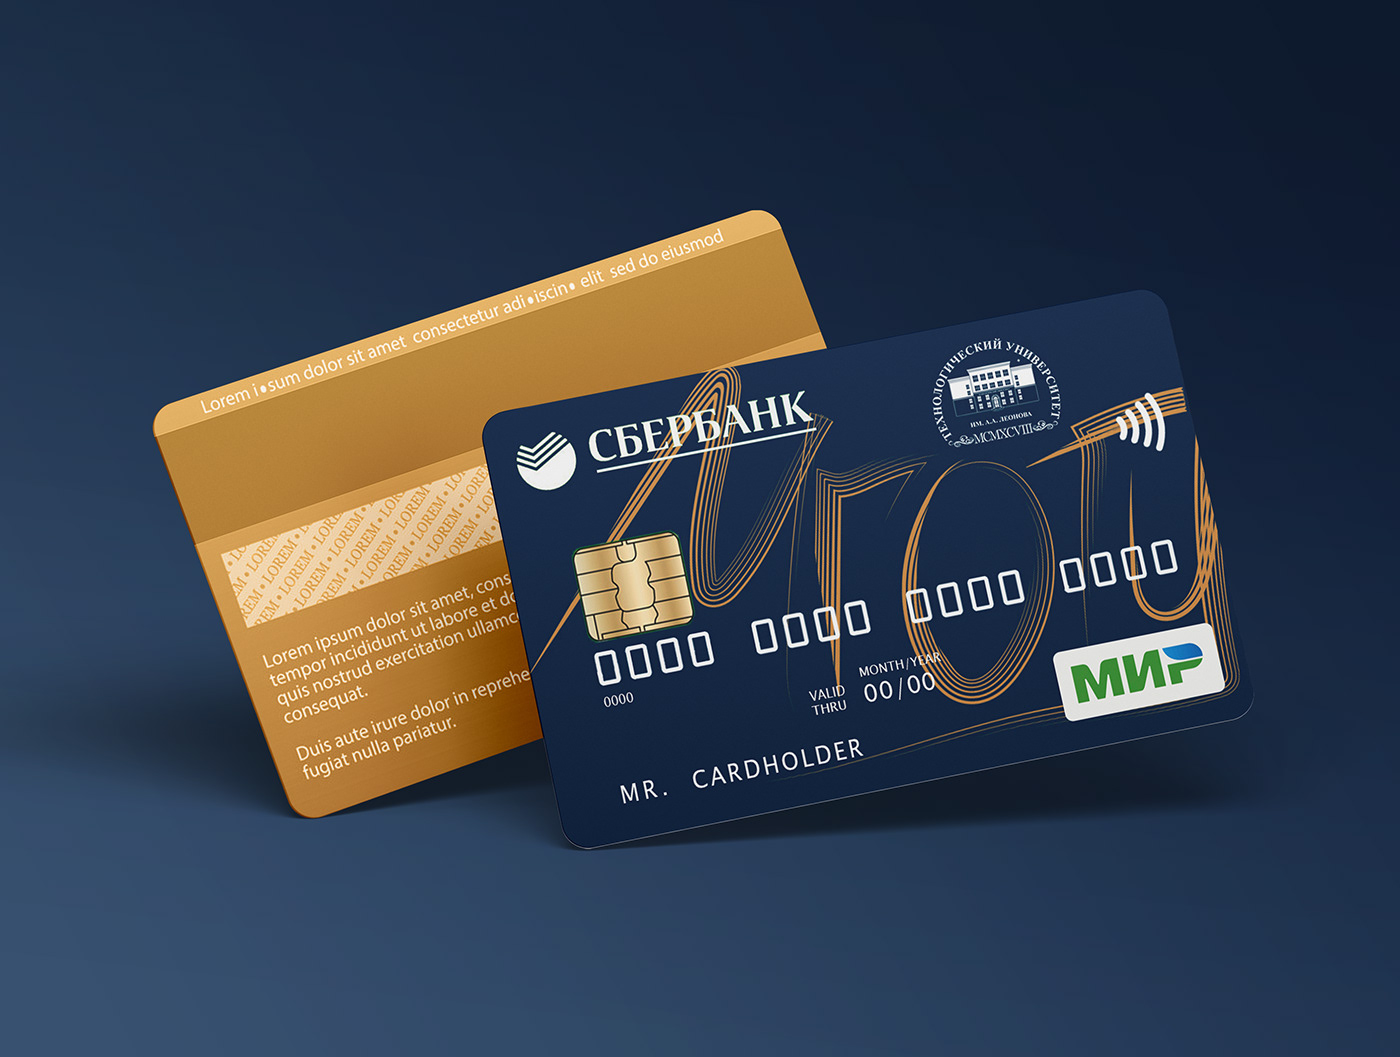 Bank bankcard card credit card design sberbank банковская карта графический дизайн дизайн Сбербанк